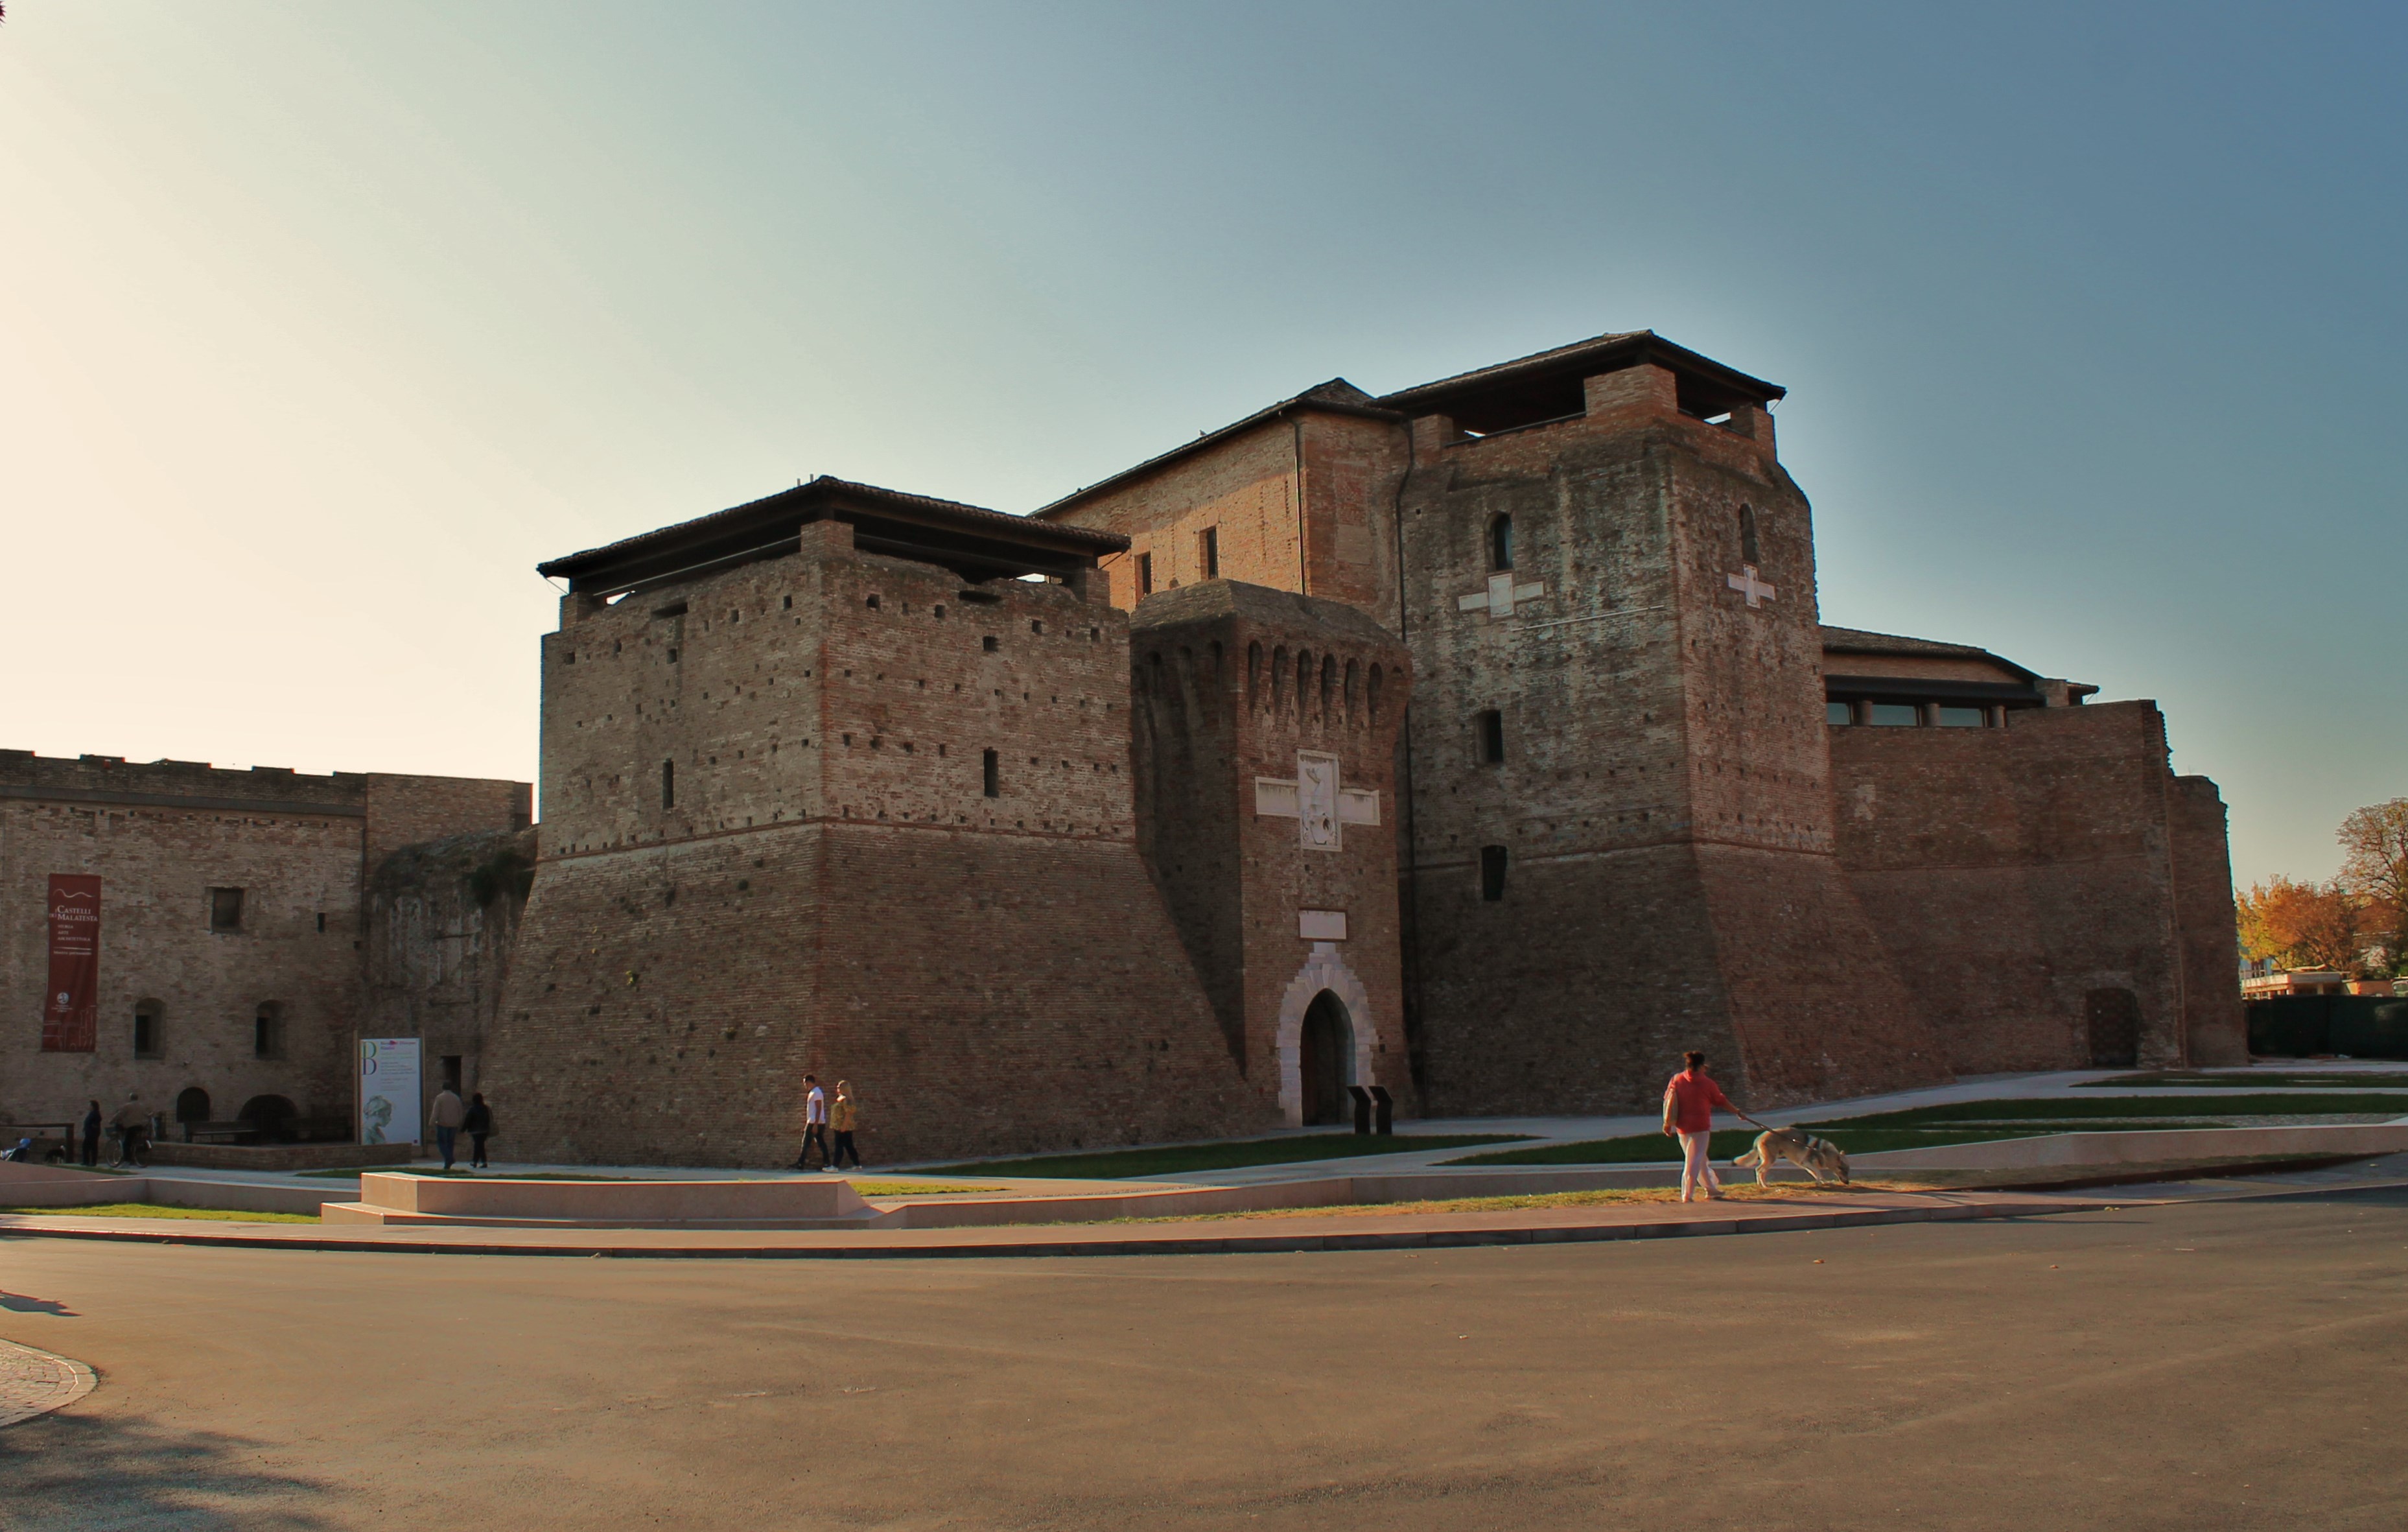 foto: https://upload.wikimedia.org/wikipedia/commons/3/3d/Castel_Sismondo_di_Rimini.jpg